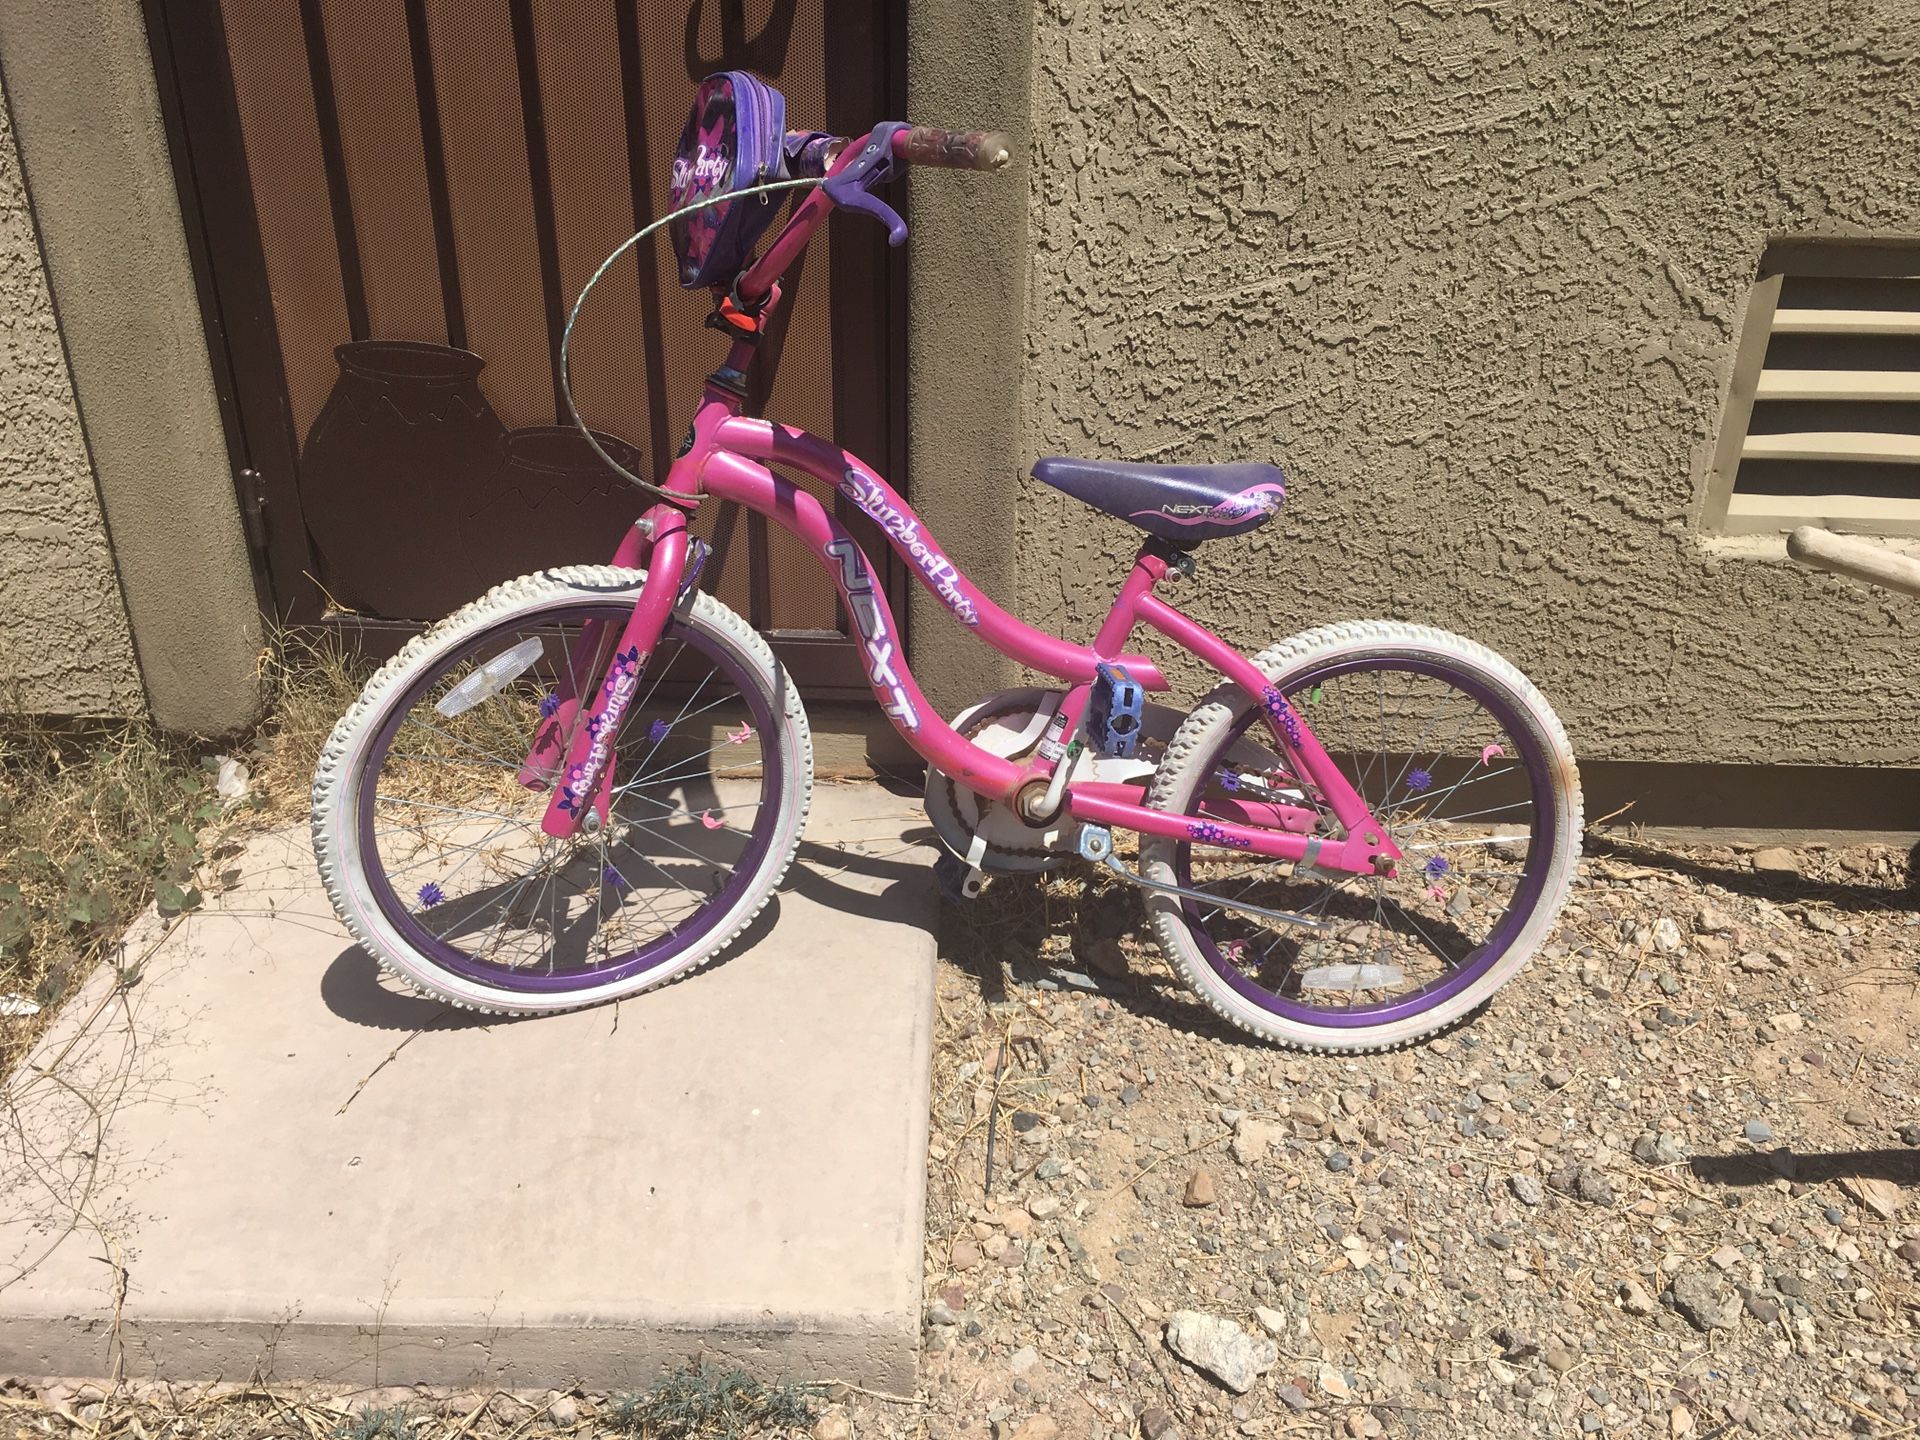 Bikes for kids